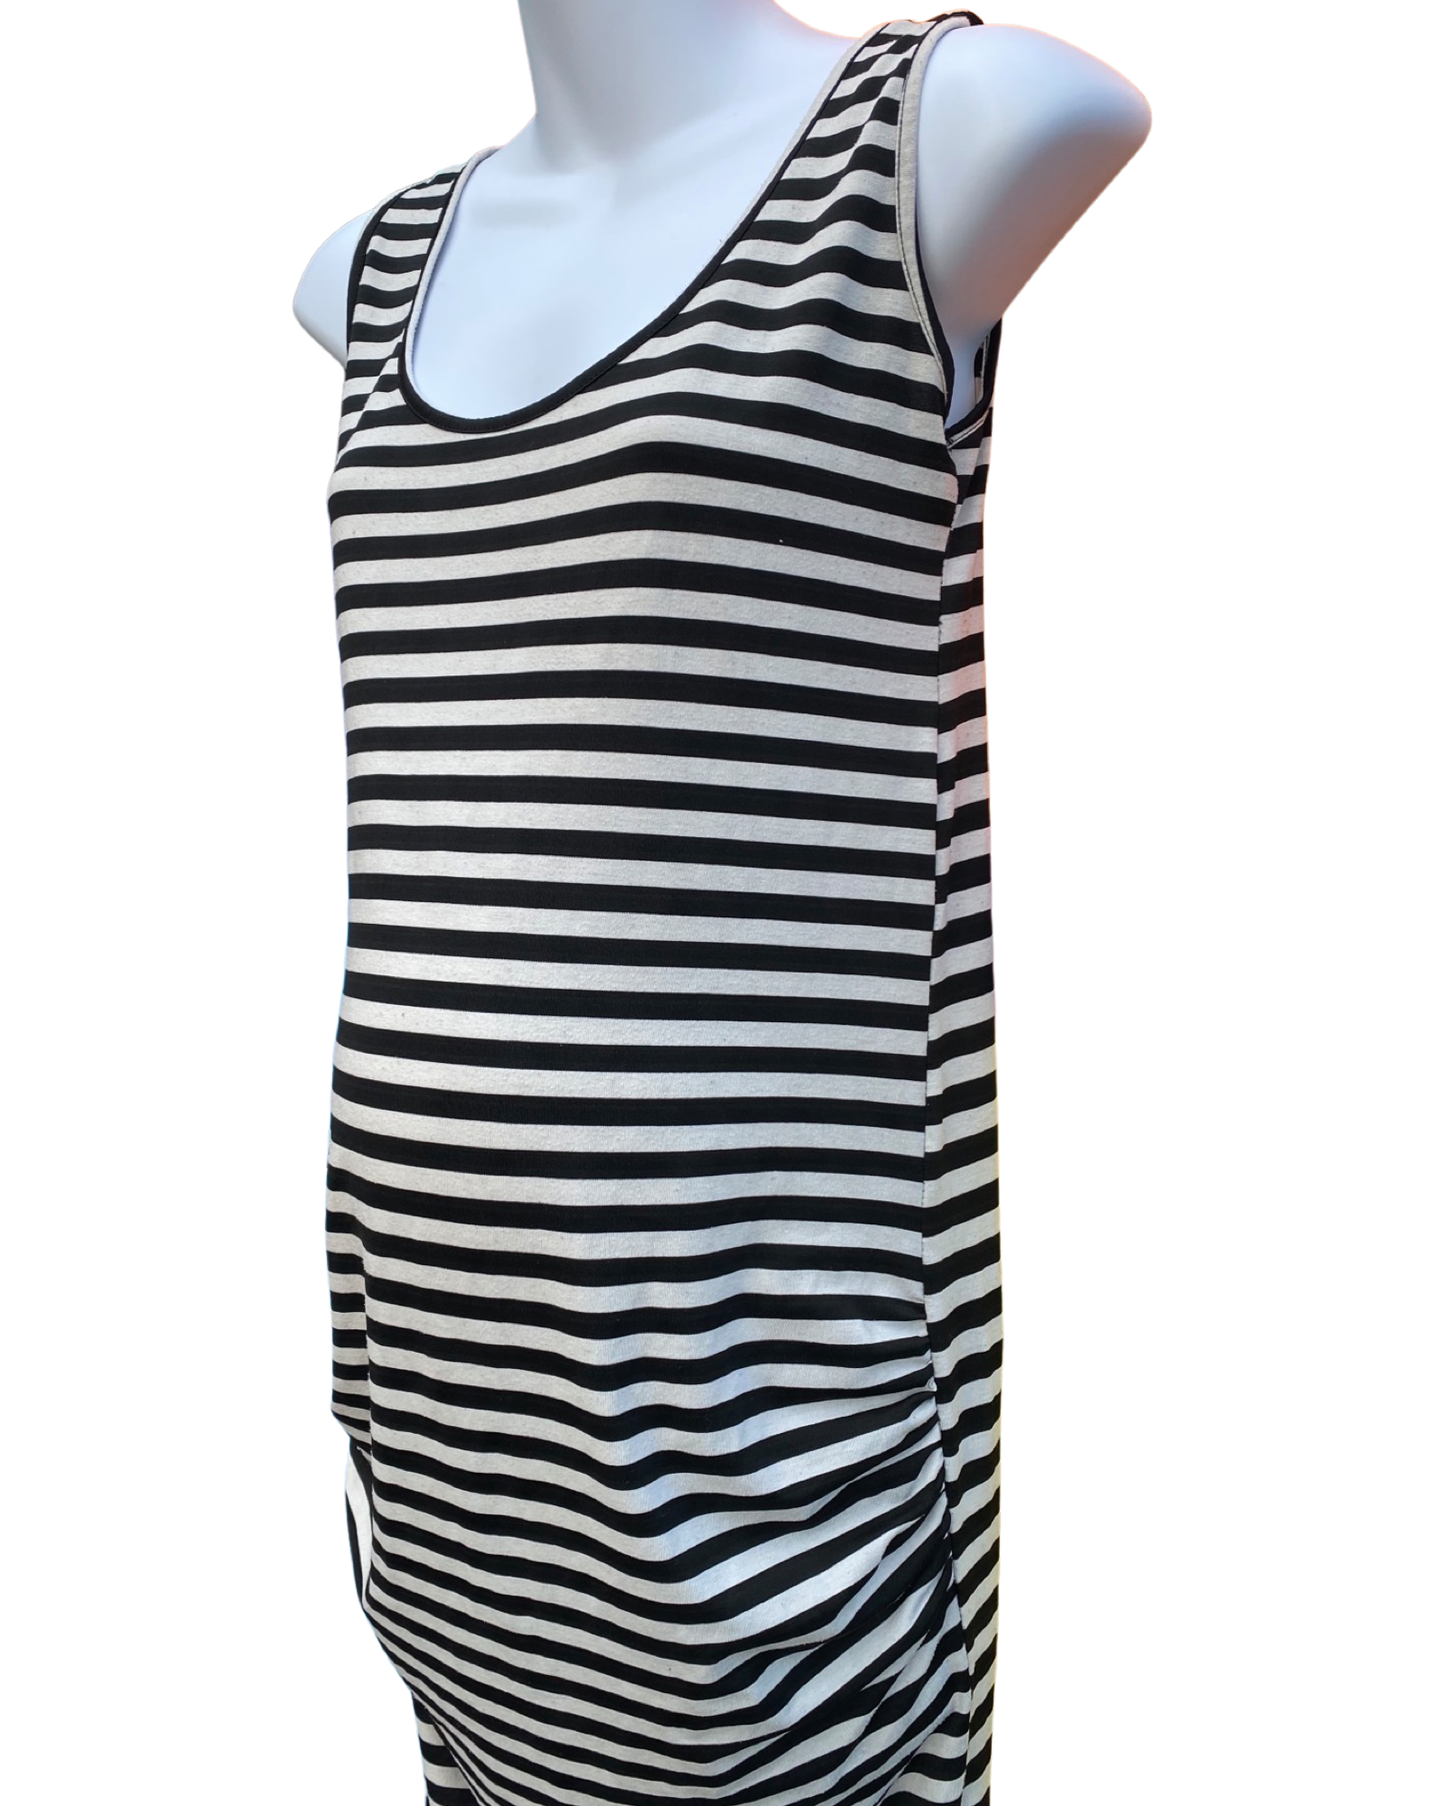 Boohoo maternity striped vest dress (size 12)